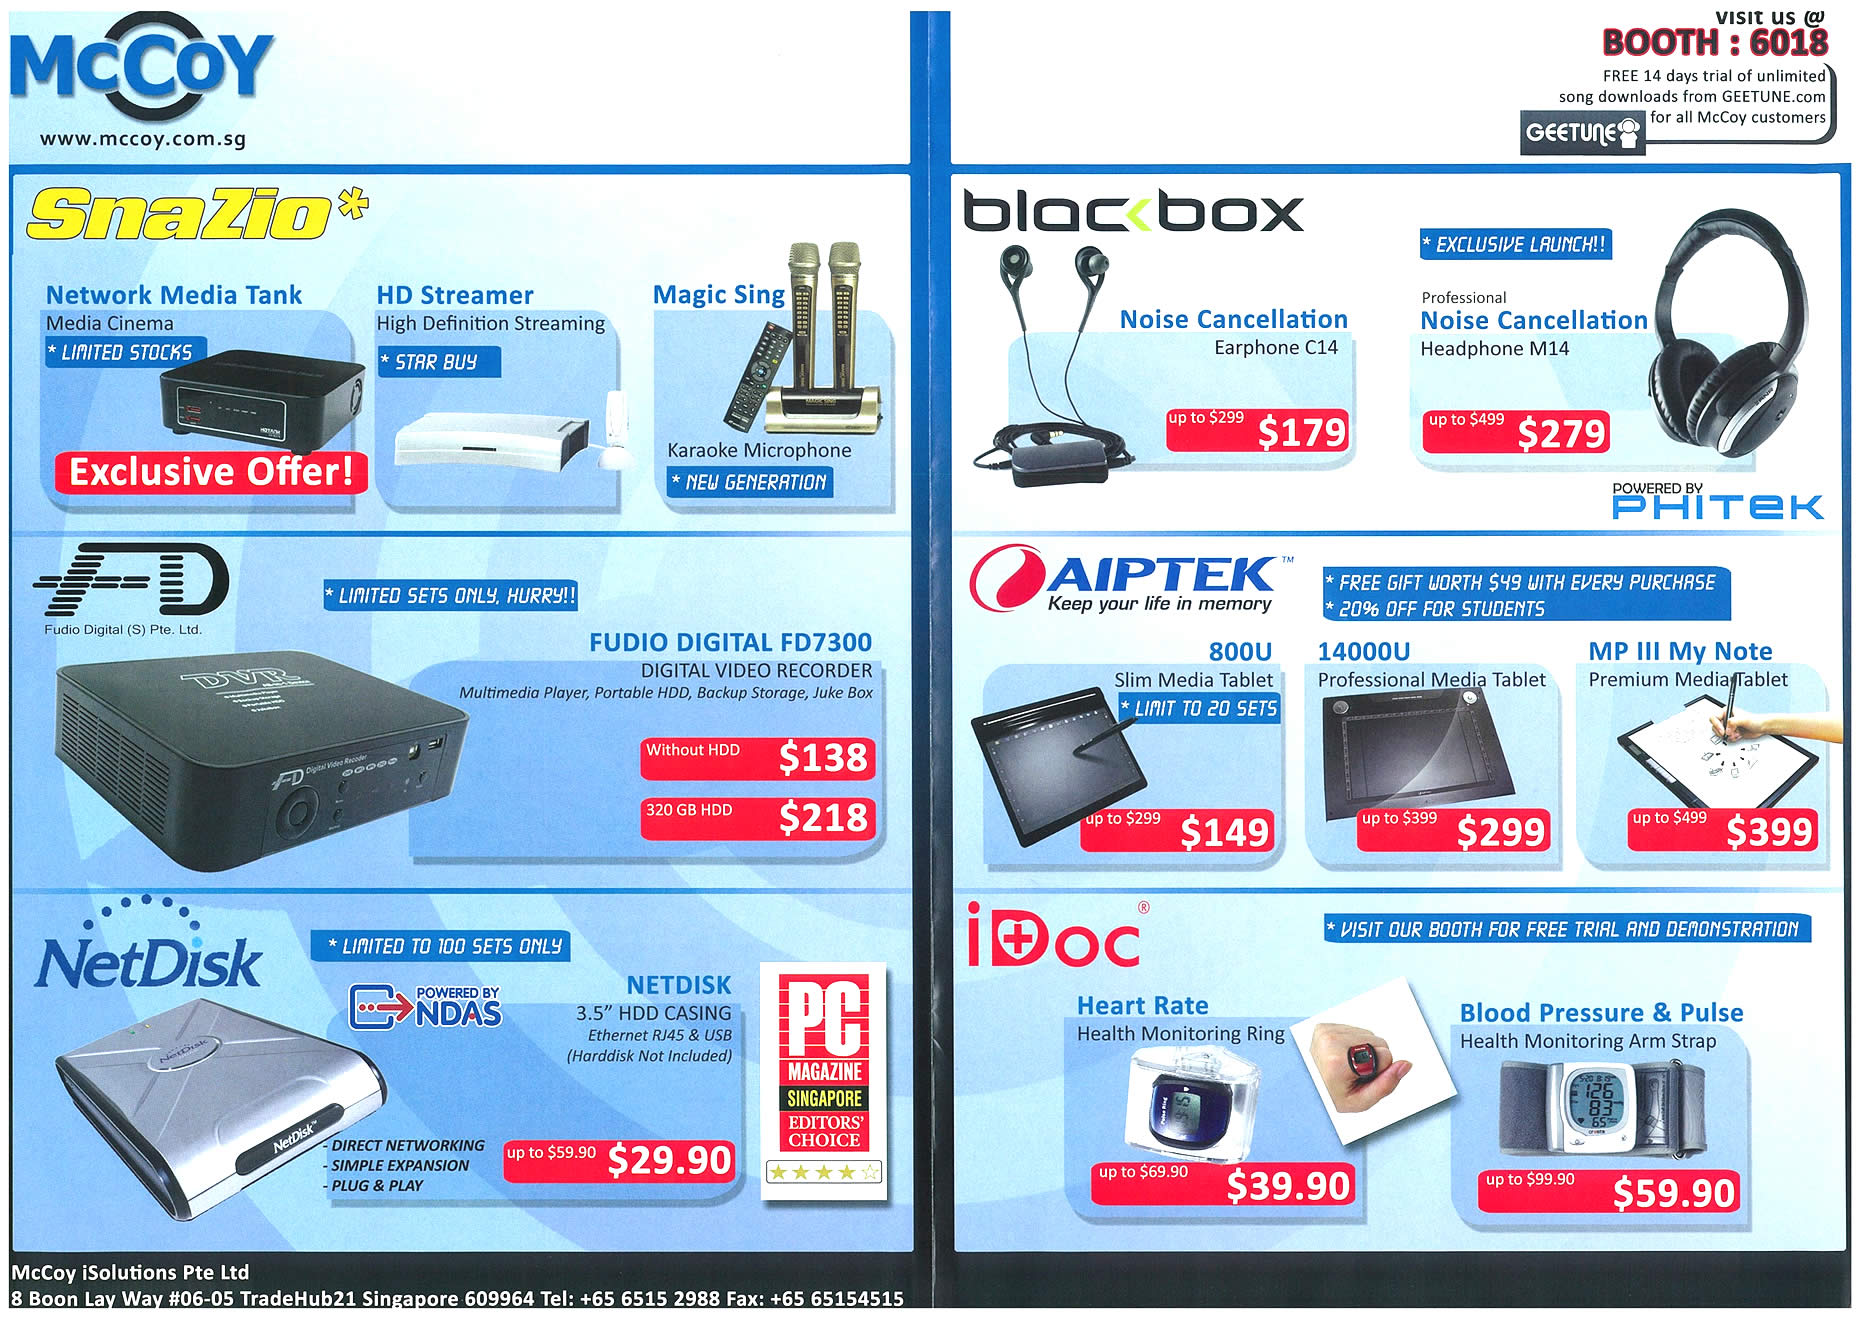 IT Show 2009 price list image brochure of Mccoy Snazio Fd Netdisk Blacbox Aiptek Idoc Tclong